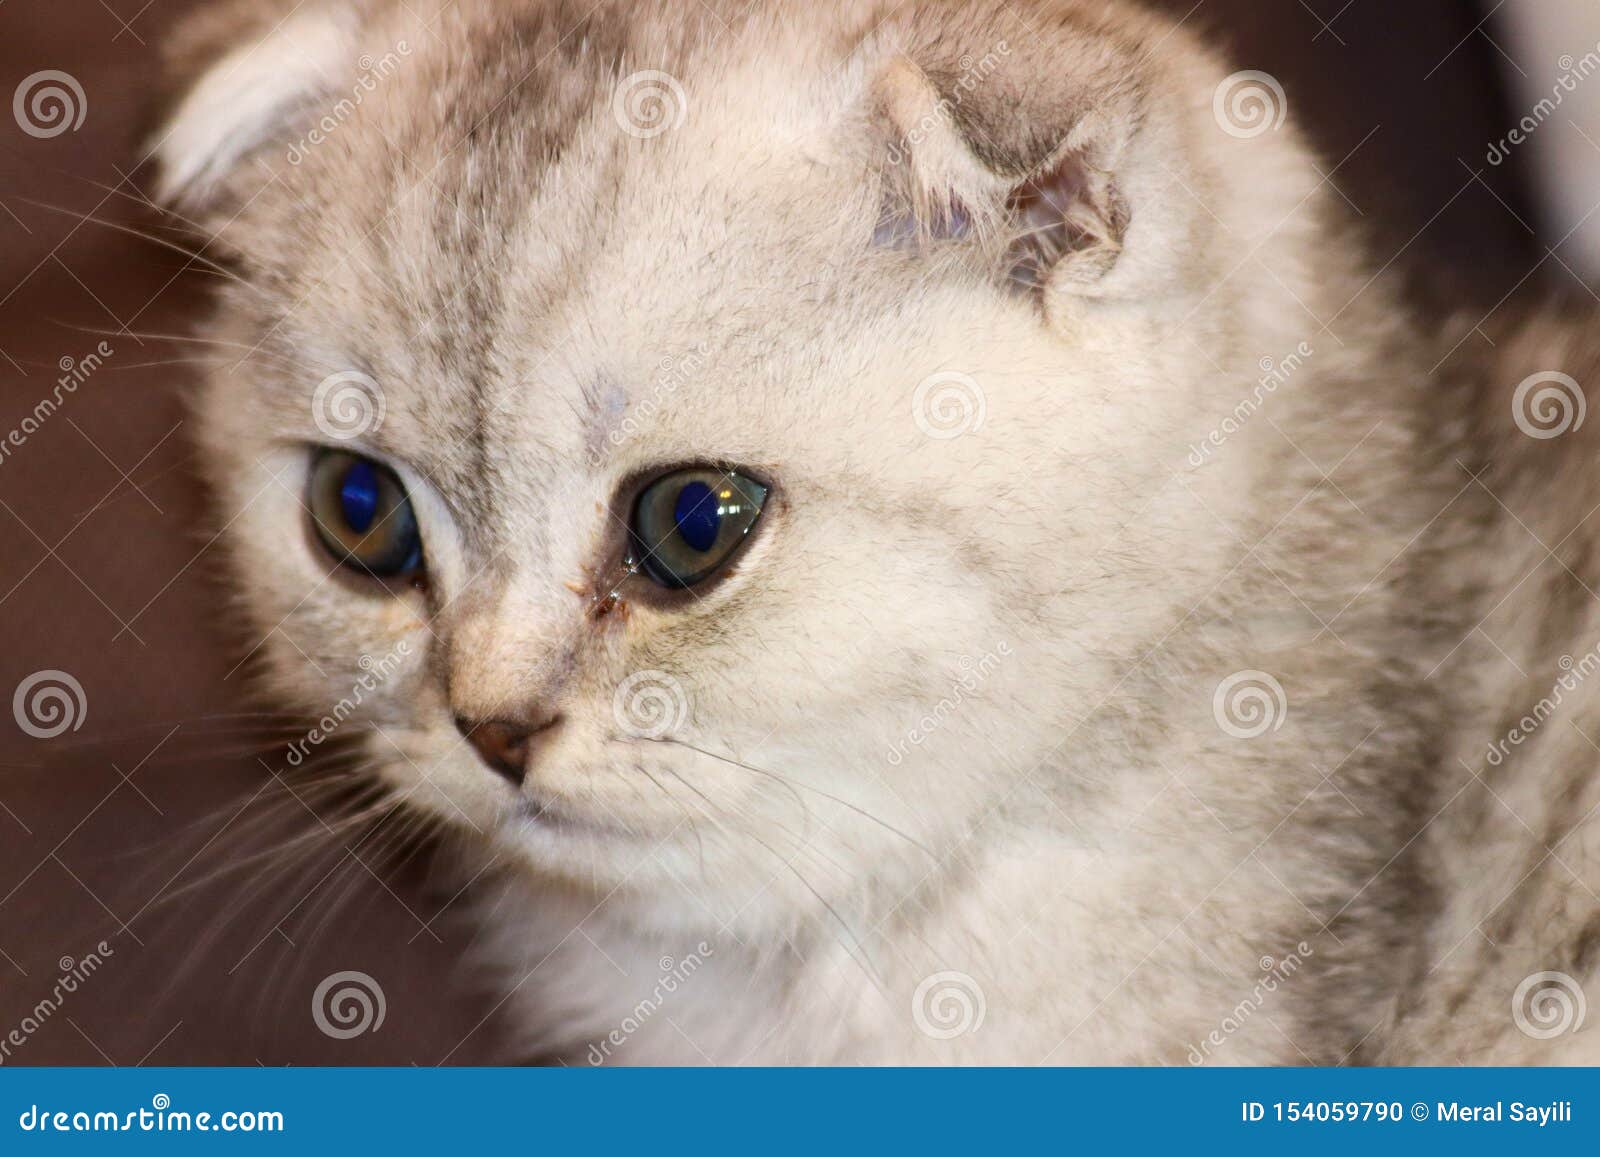 Cute Kitten Scottish Cat with Round Eyes, Acaip Folded Forward ...